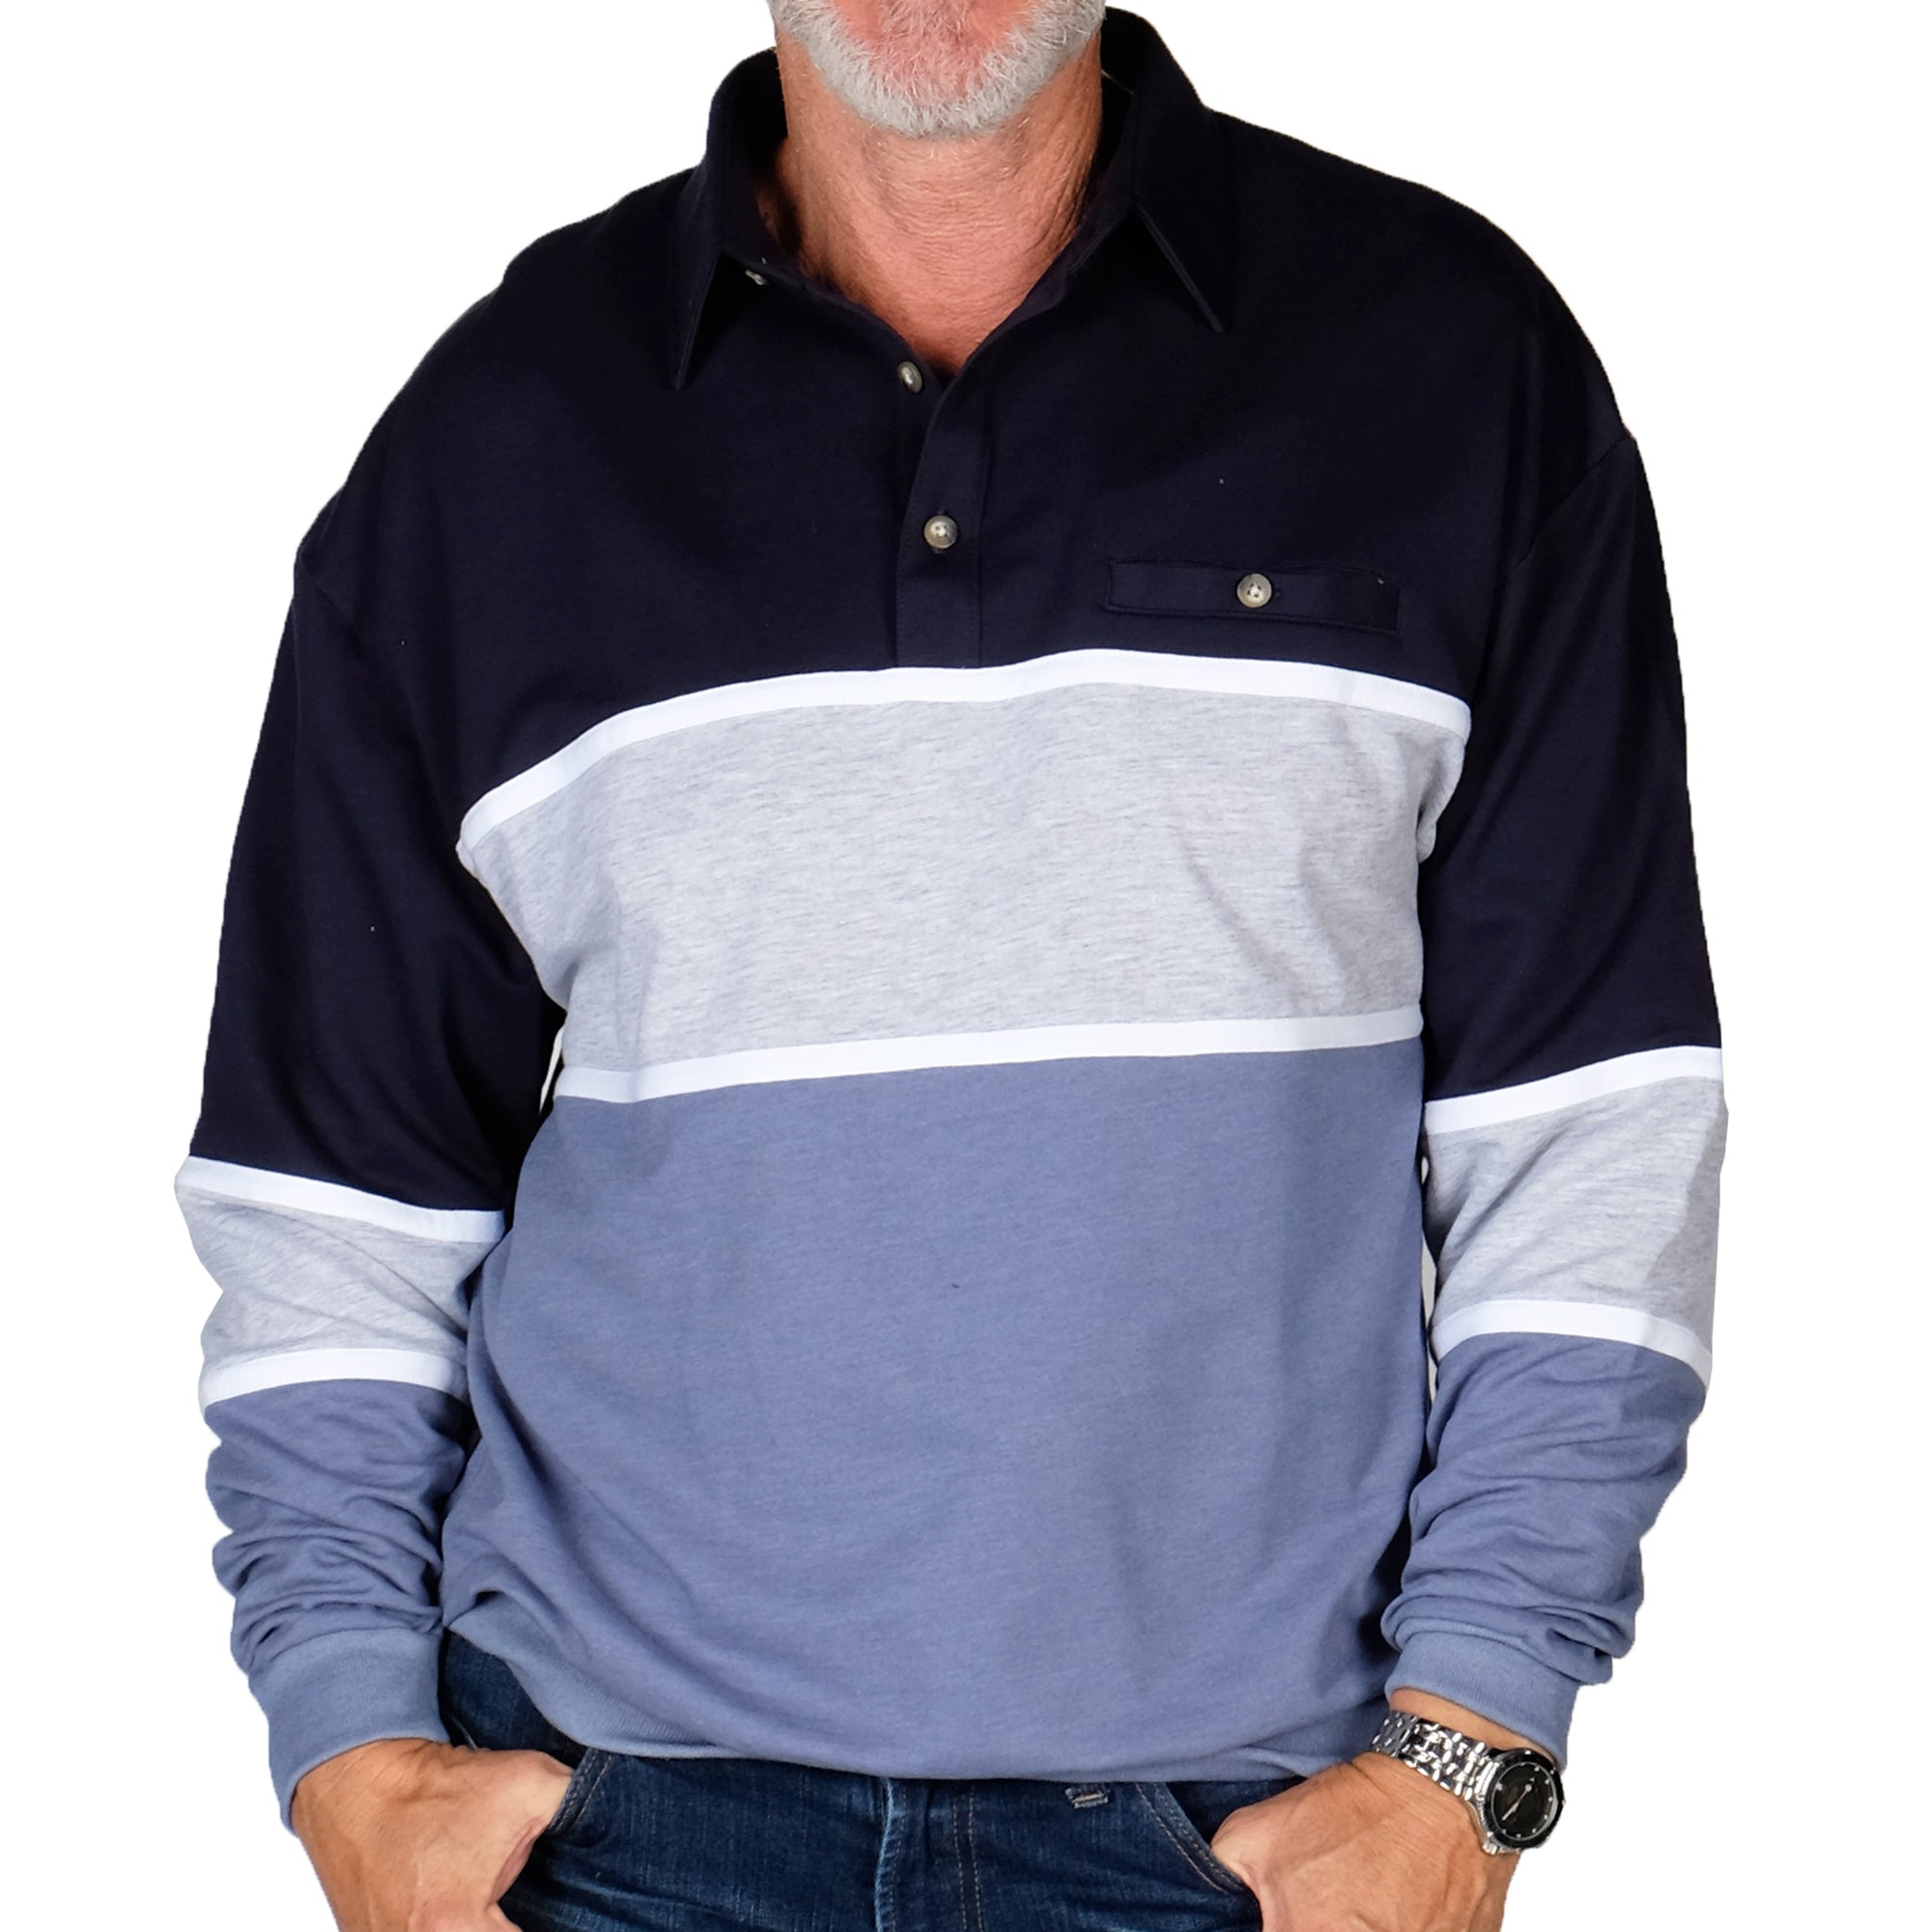 Classics by Palmland Horizontal Stripes Banded Bottom Shirt 6094-728 Navy - Big and Tall - theflagshirt